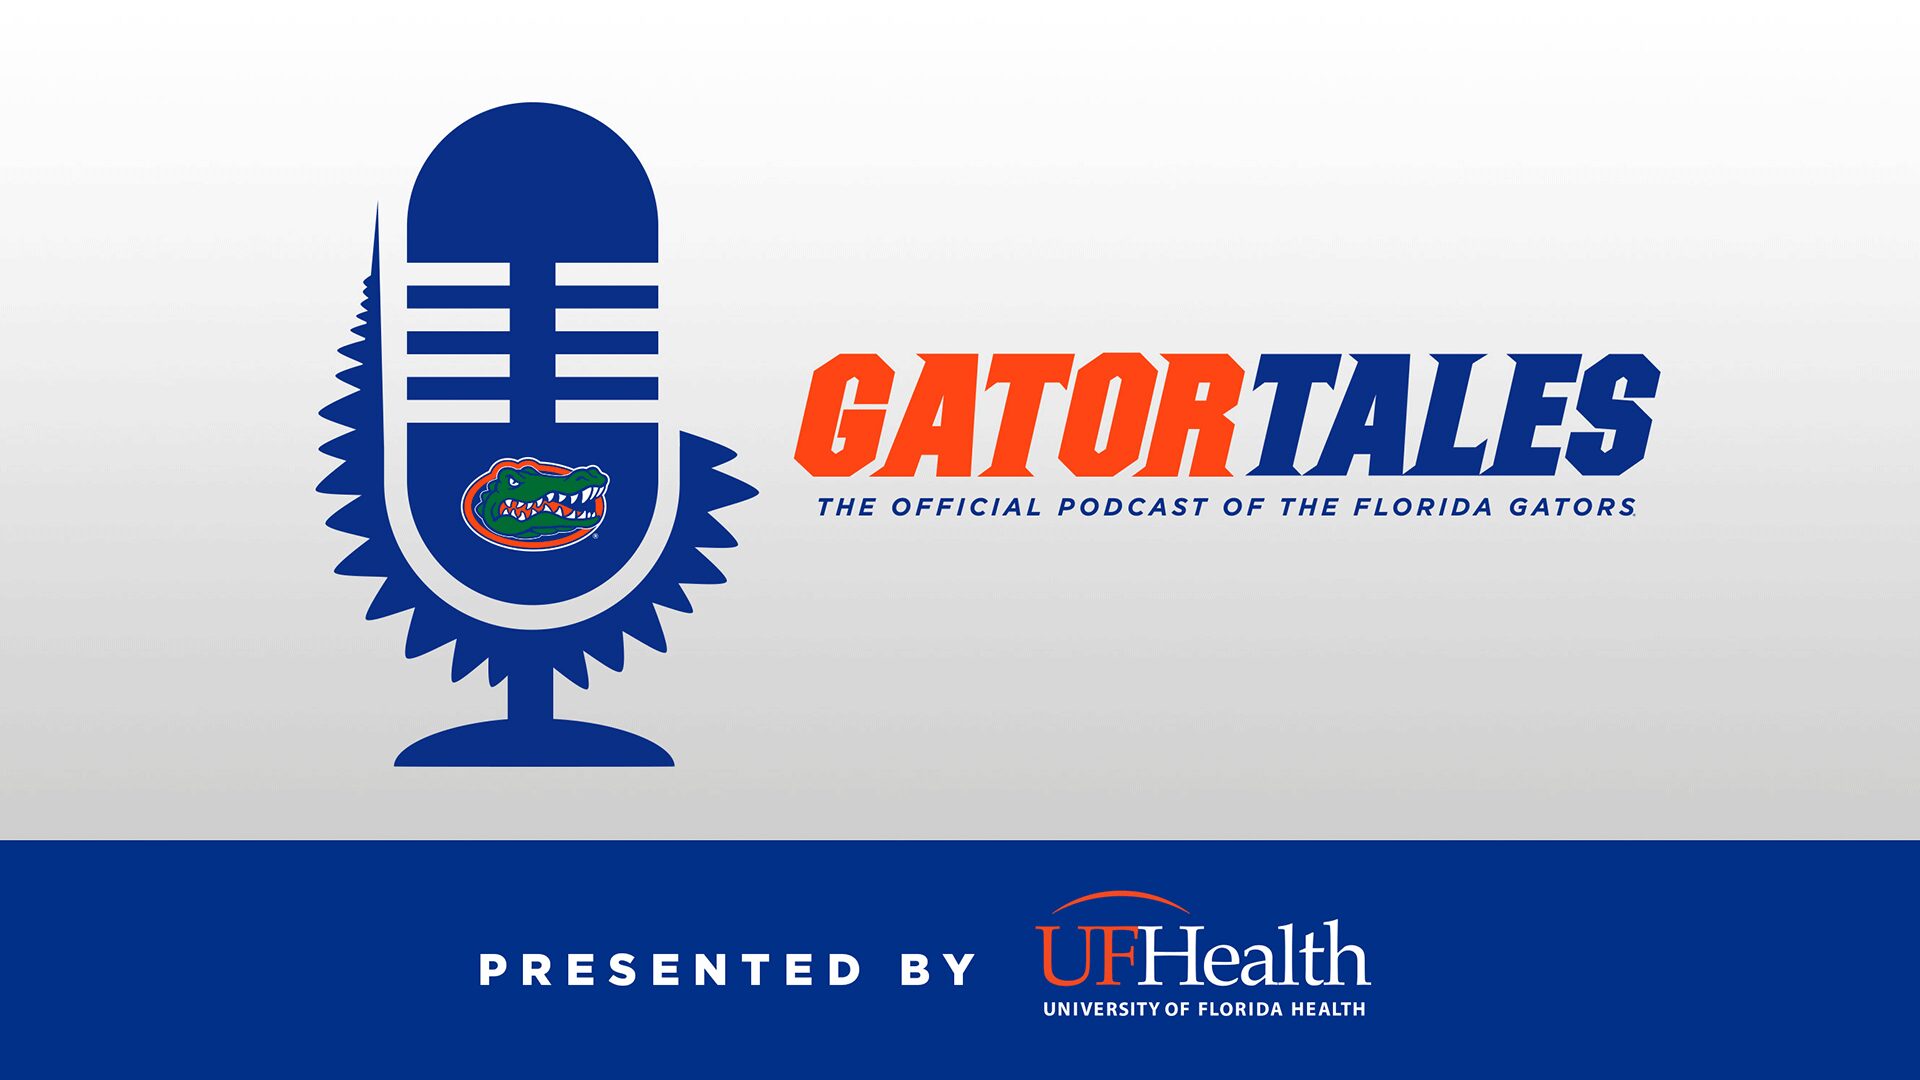 Gator Tales presented by UF Health